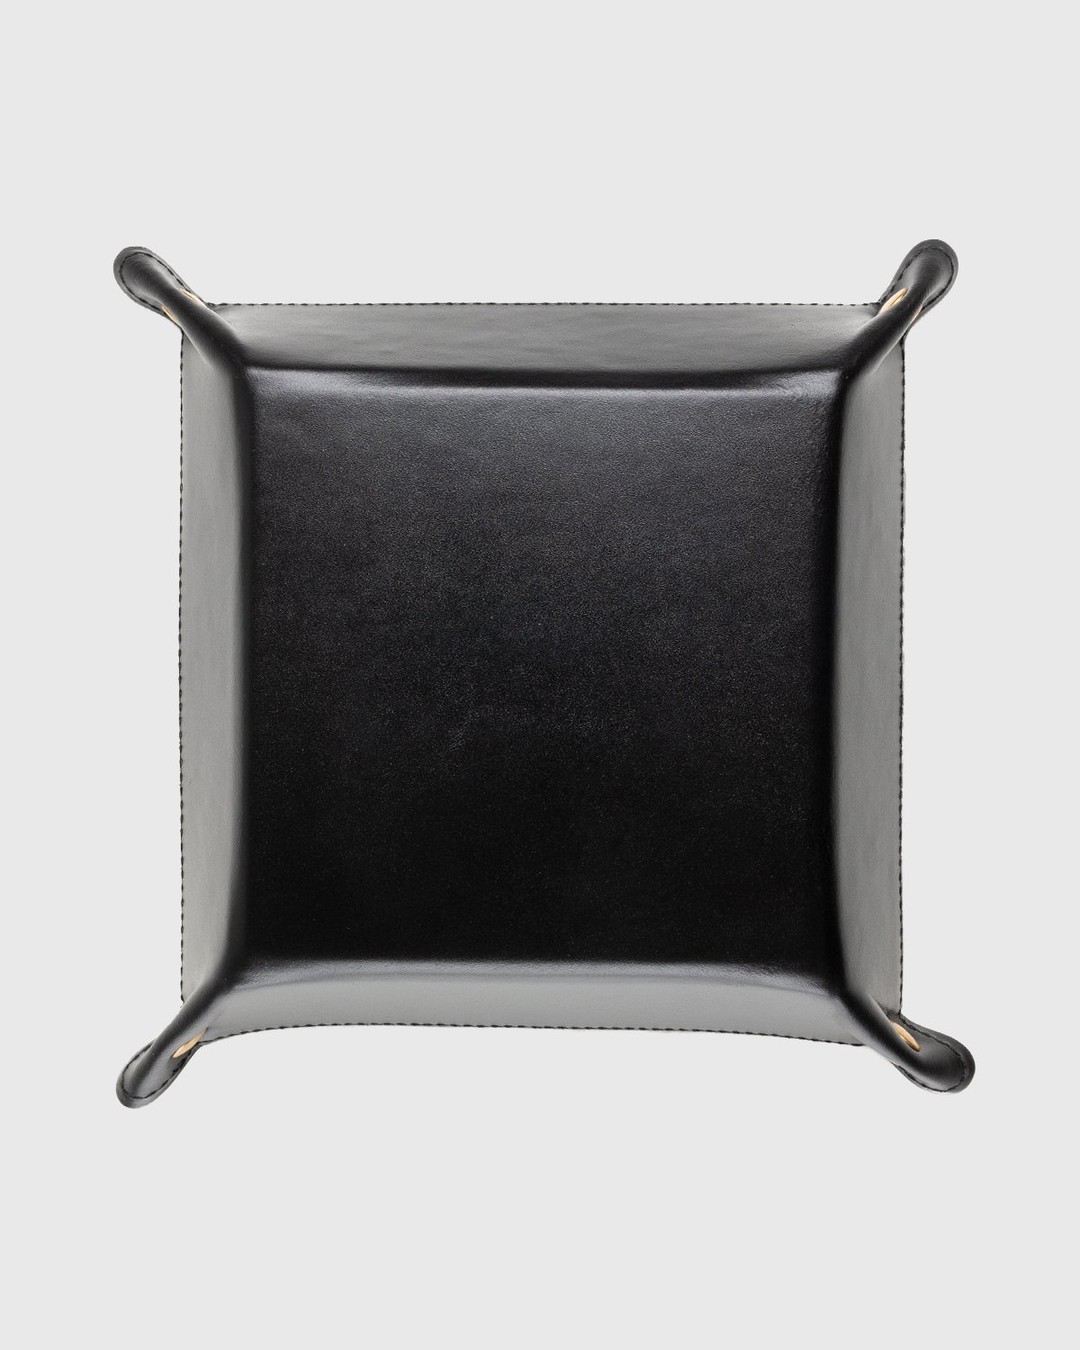 Jacob & Co. x Highsnobiety – Leather Key Tray Black - Desk Accessories - Black - Image 2